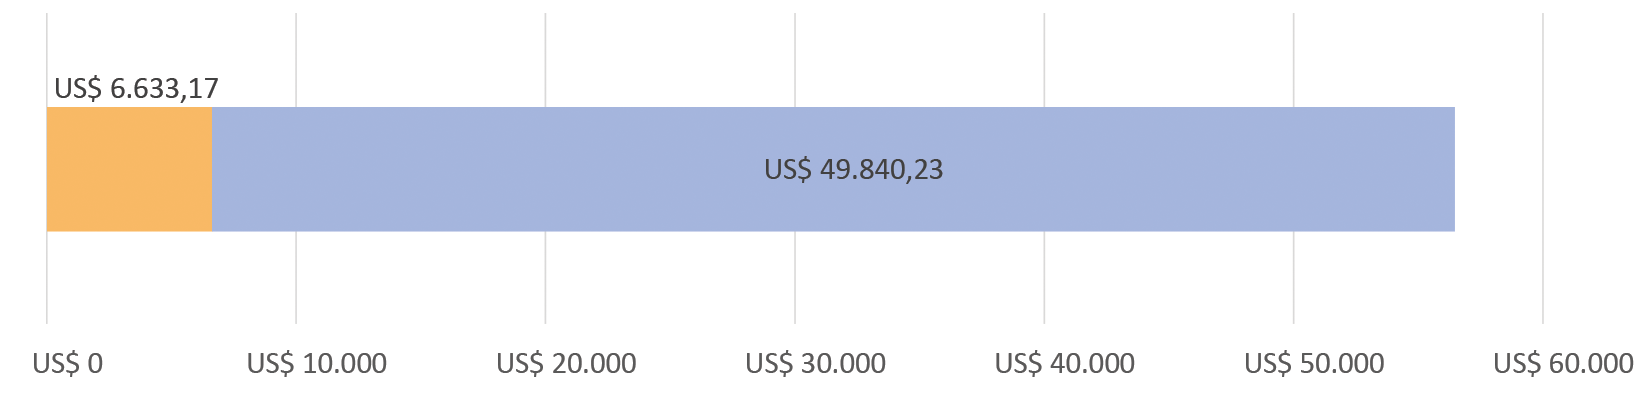 US$ 6.633,17 gastos; US$49.840,23 restantes